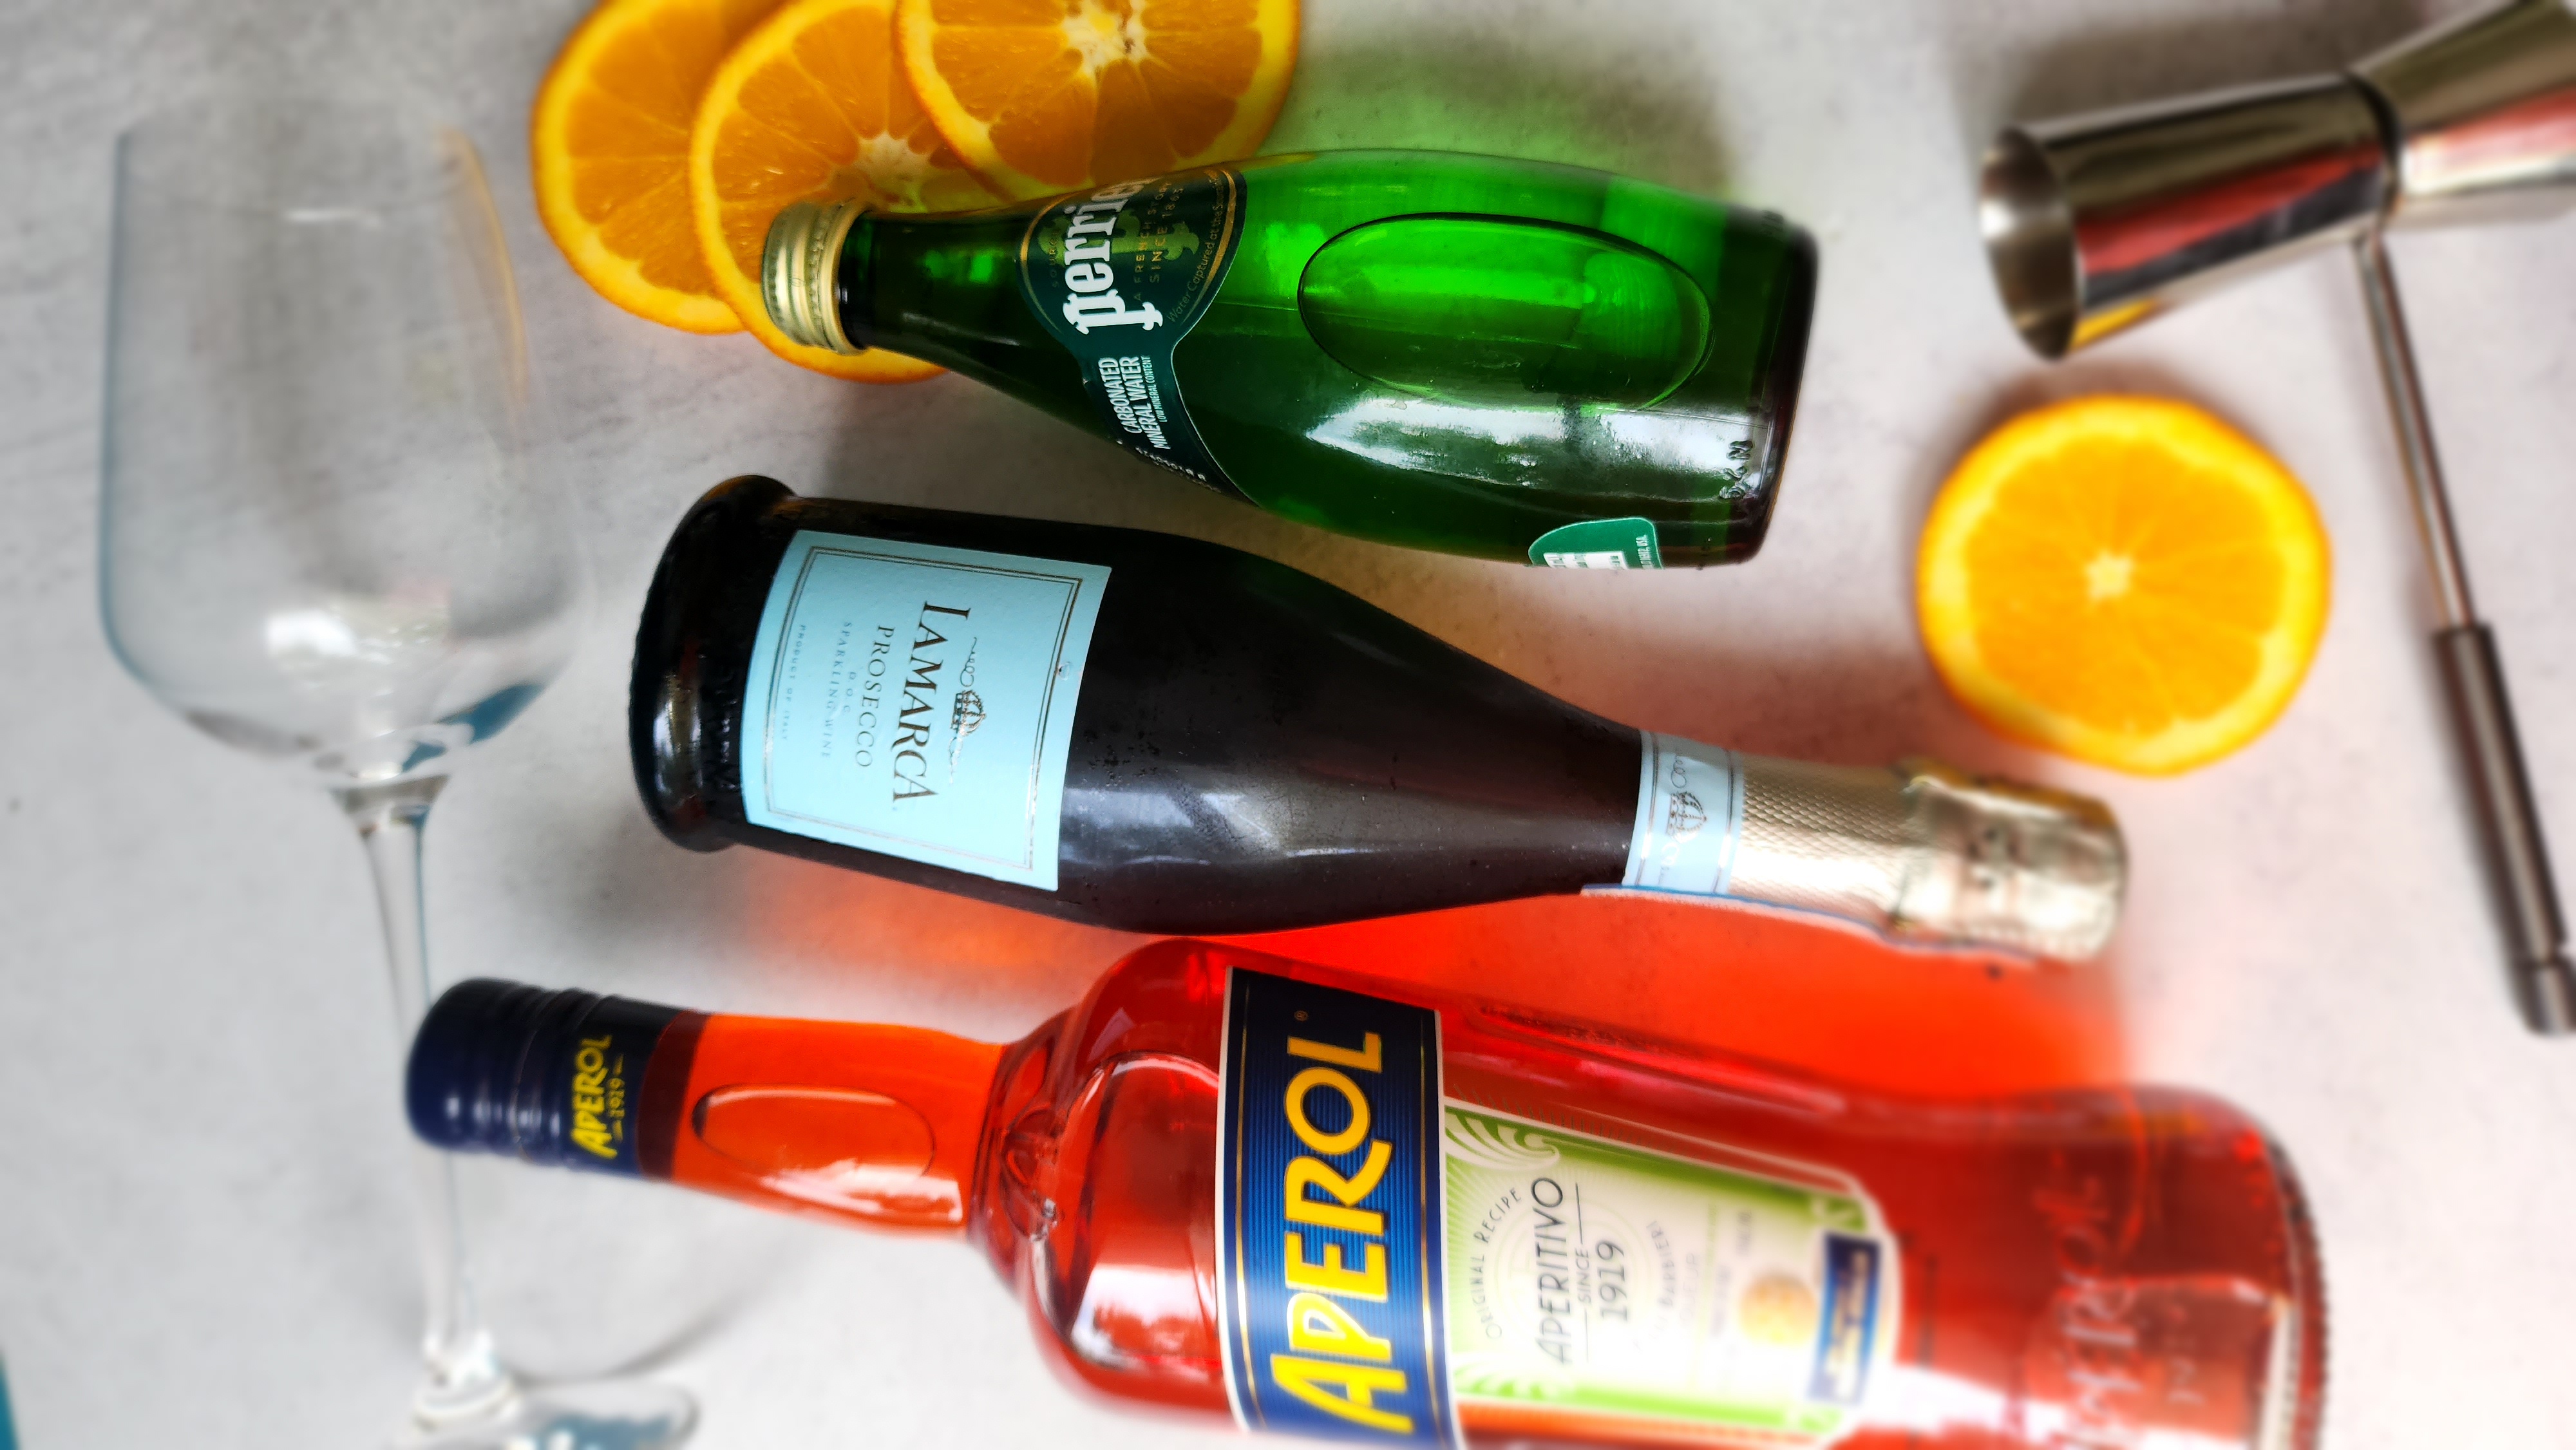 ingredients for an Aperol spritz:  prosecco, club soda, Aperol